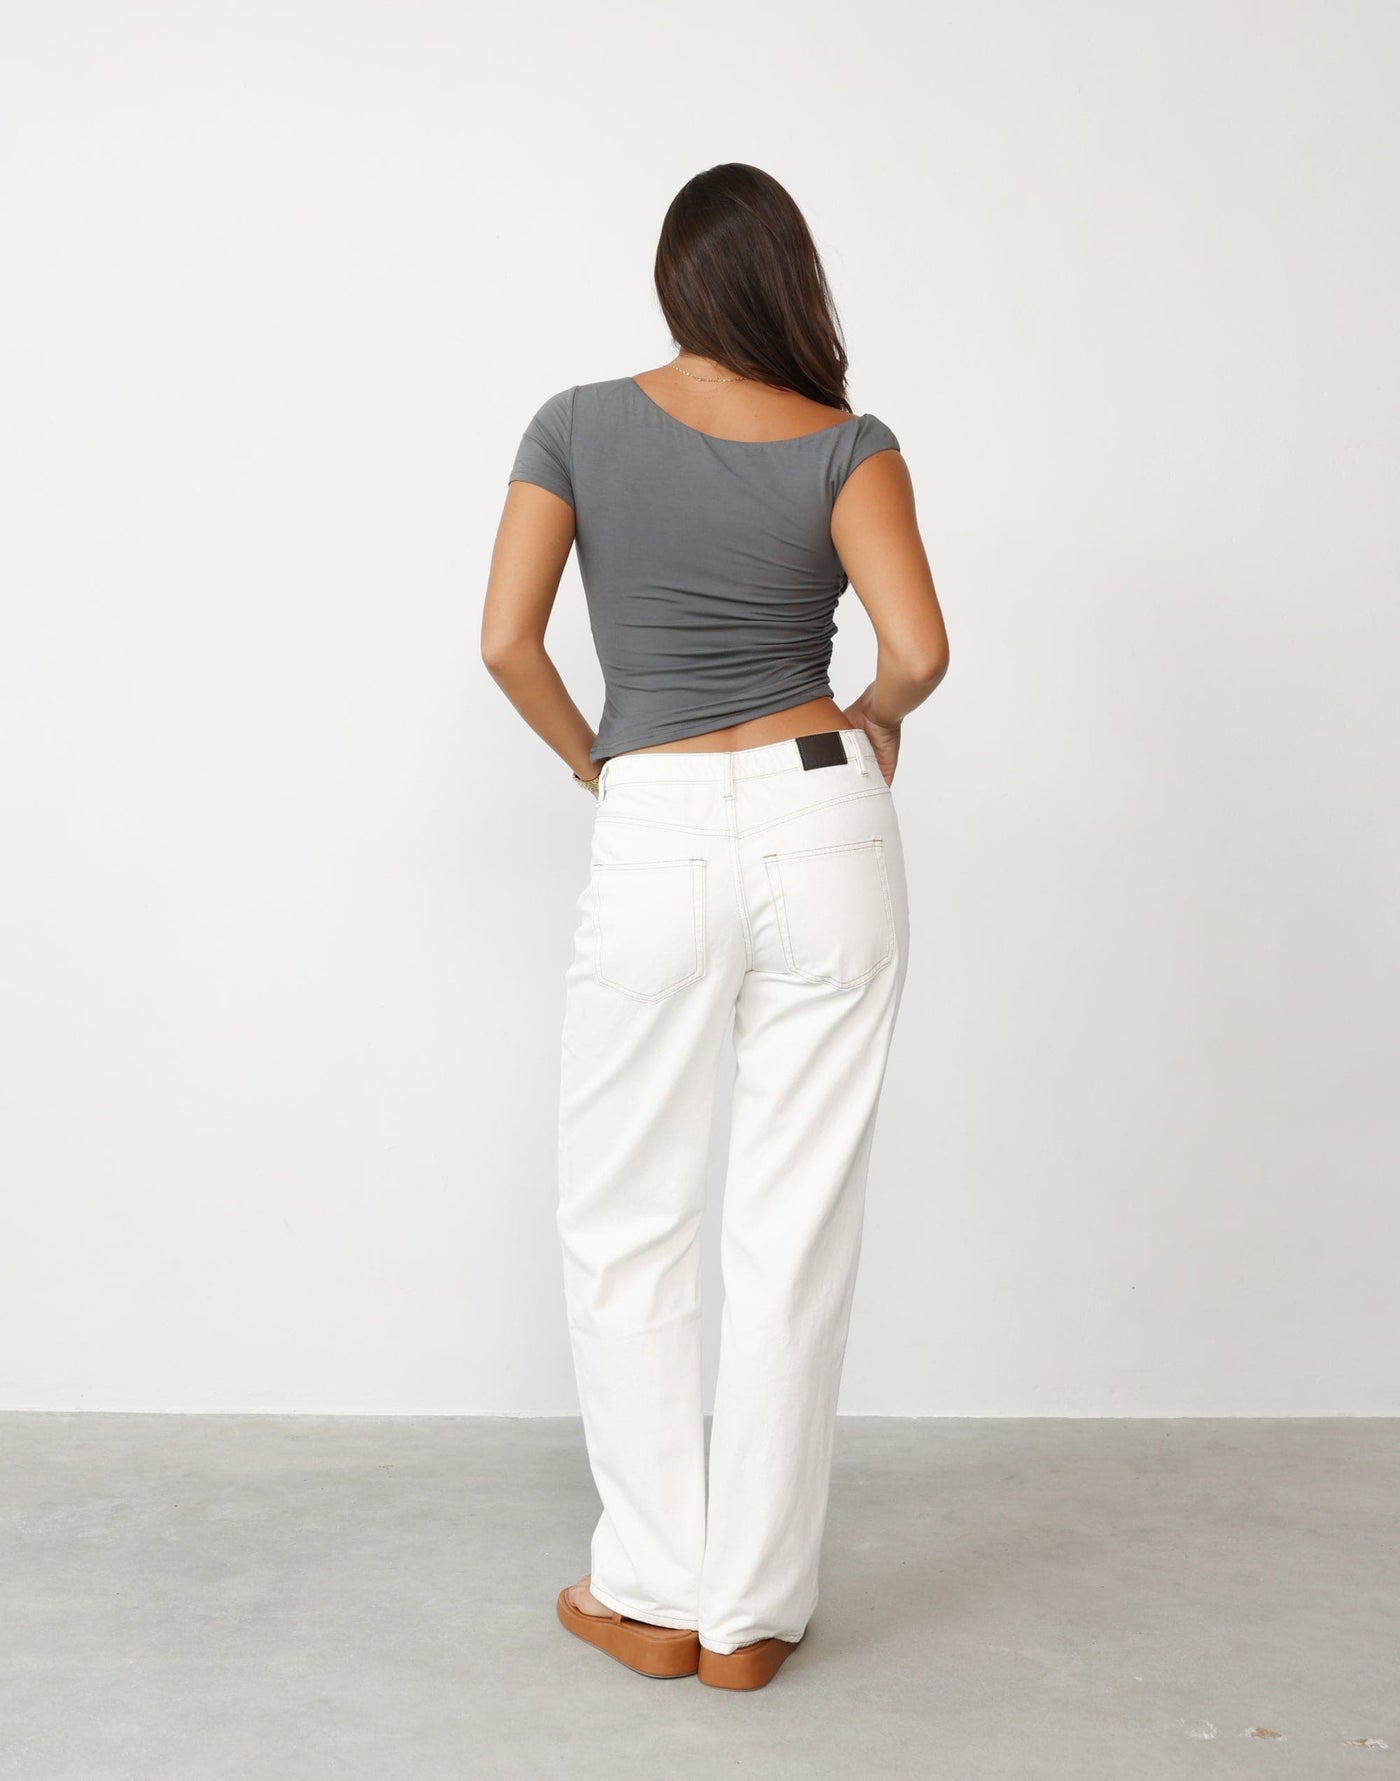 Leona Top (Charcoal) - One Shoulder Neckline Bodycon Top - Women's Top - Charcoal Clothing